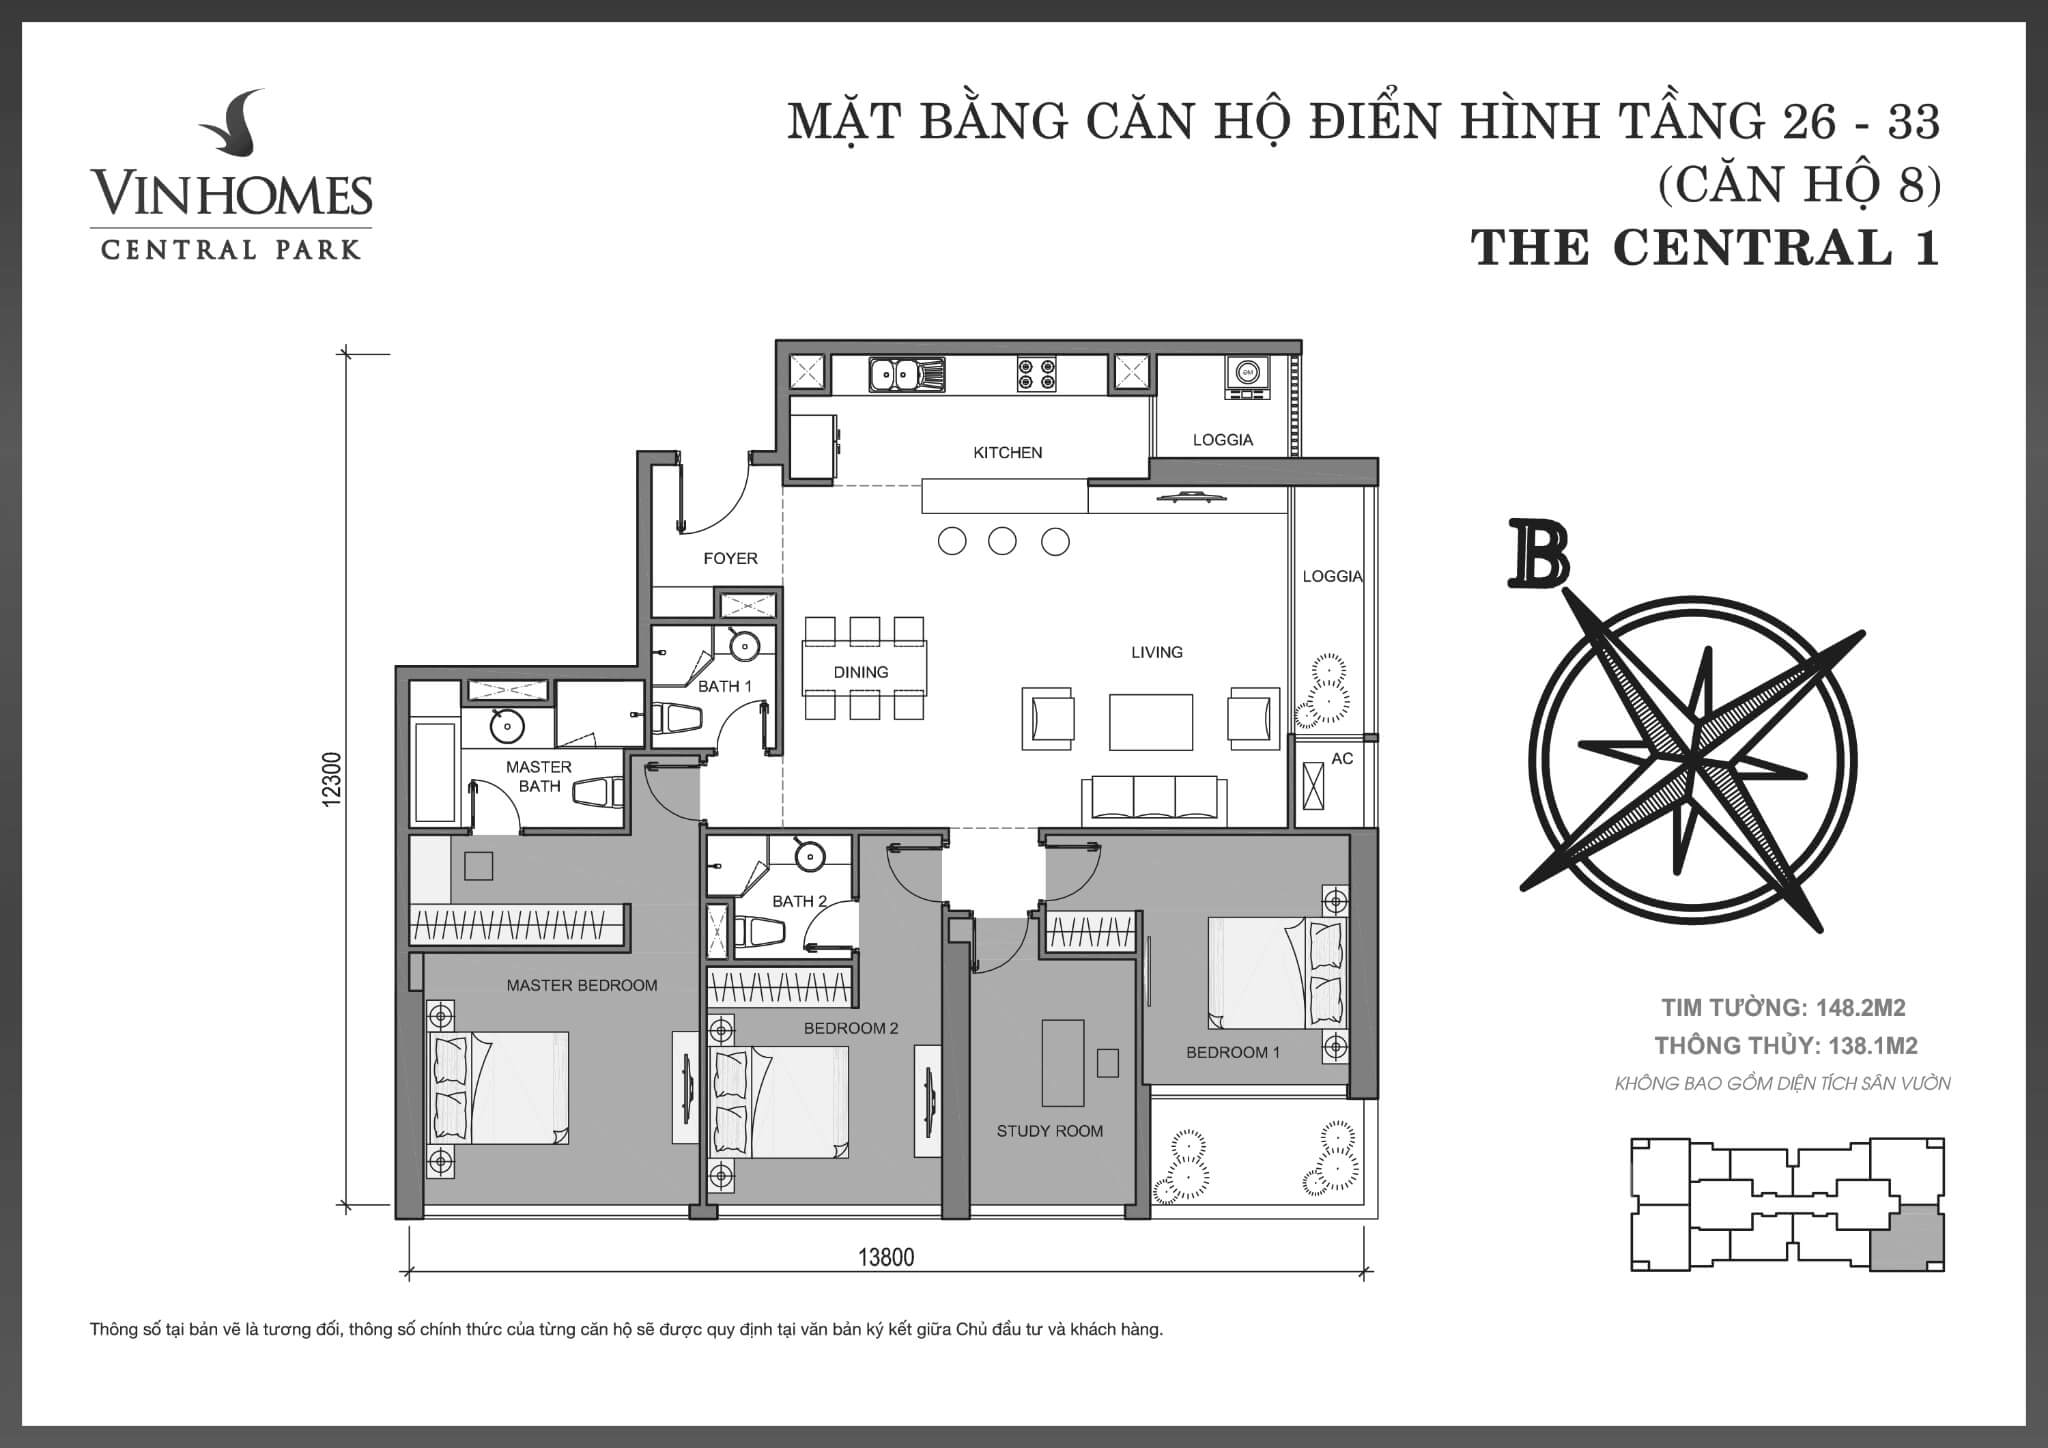 Layout căn hộ số 08 tầng 26-33 tòa The Central 1 - Mặt bằng Vinhomes Central Park